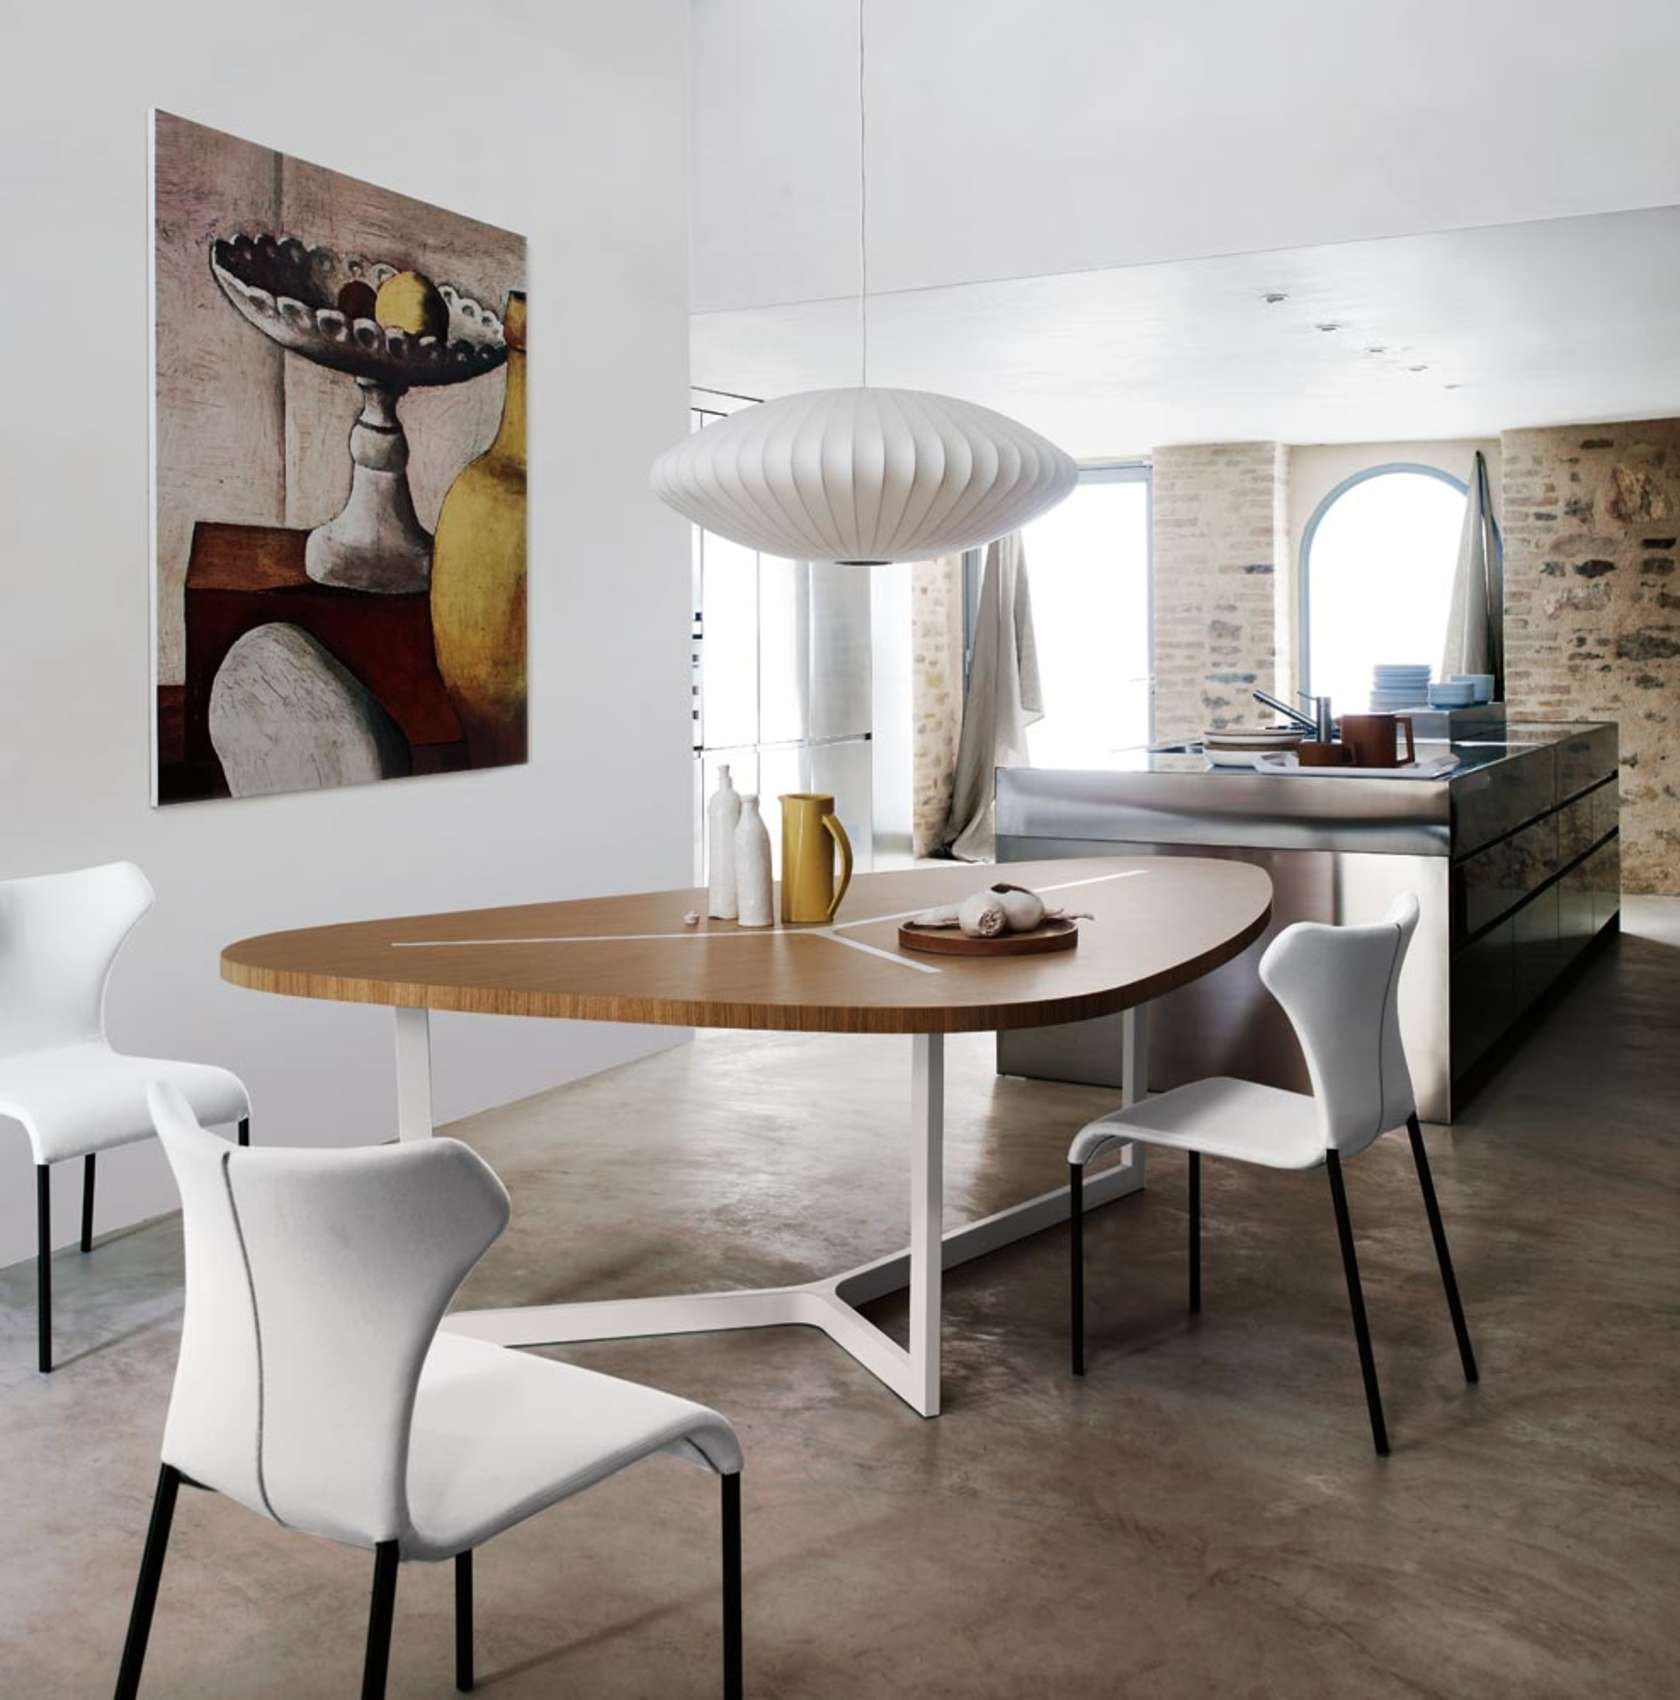 Дизайн кухонного стола. Стол ts234 b&b Italia. Обеденный стол b&b Italia Allure o’. Стул Papilio Shell sh1. Современные столы для кухни.